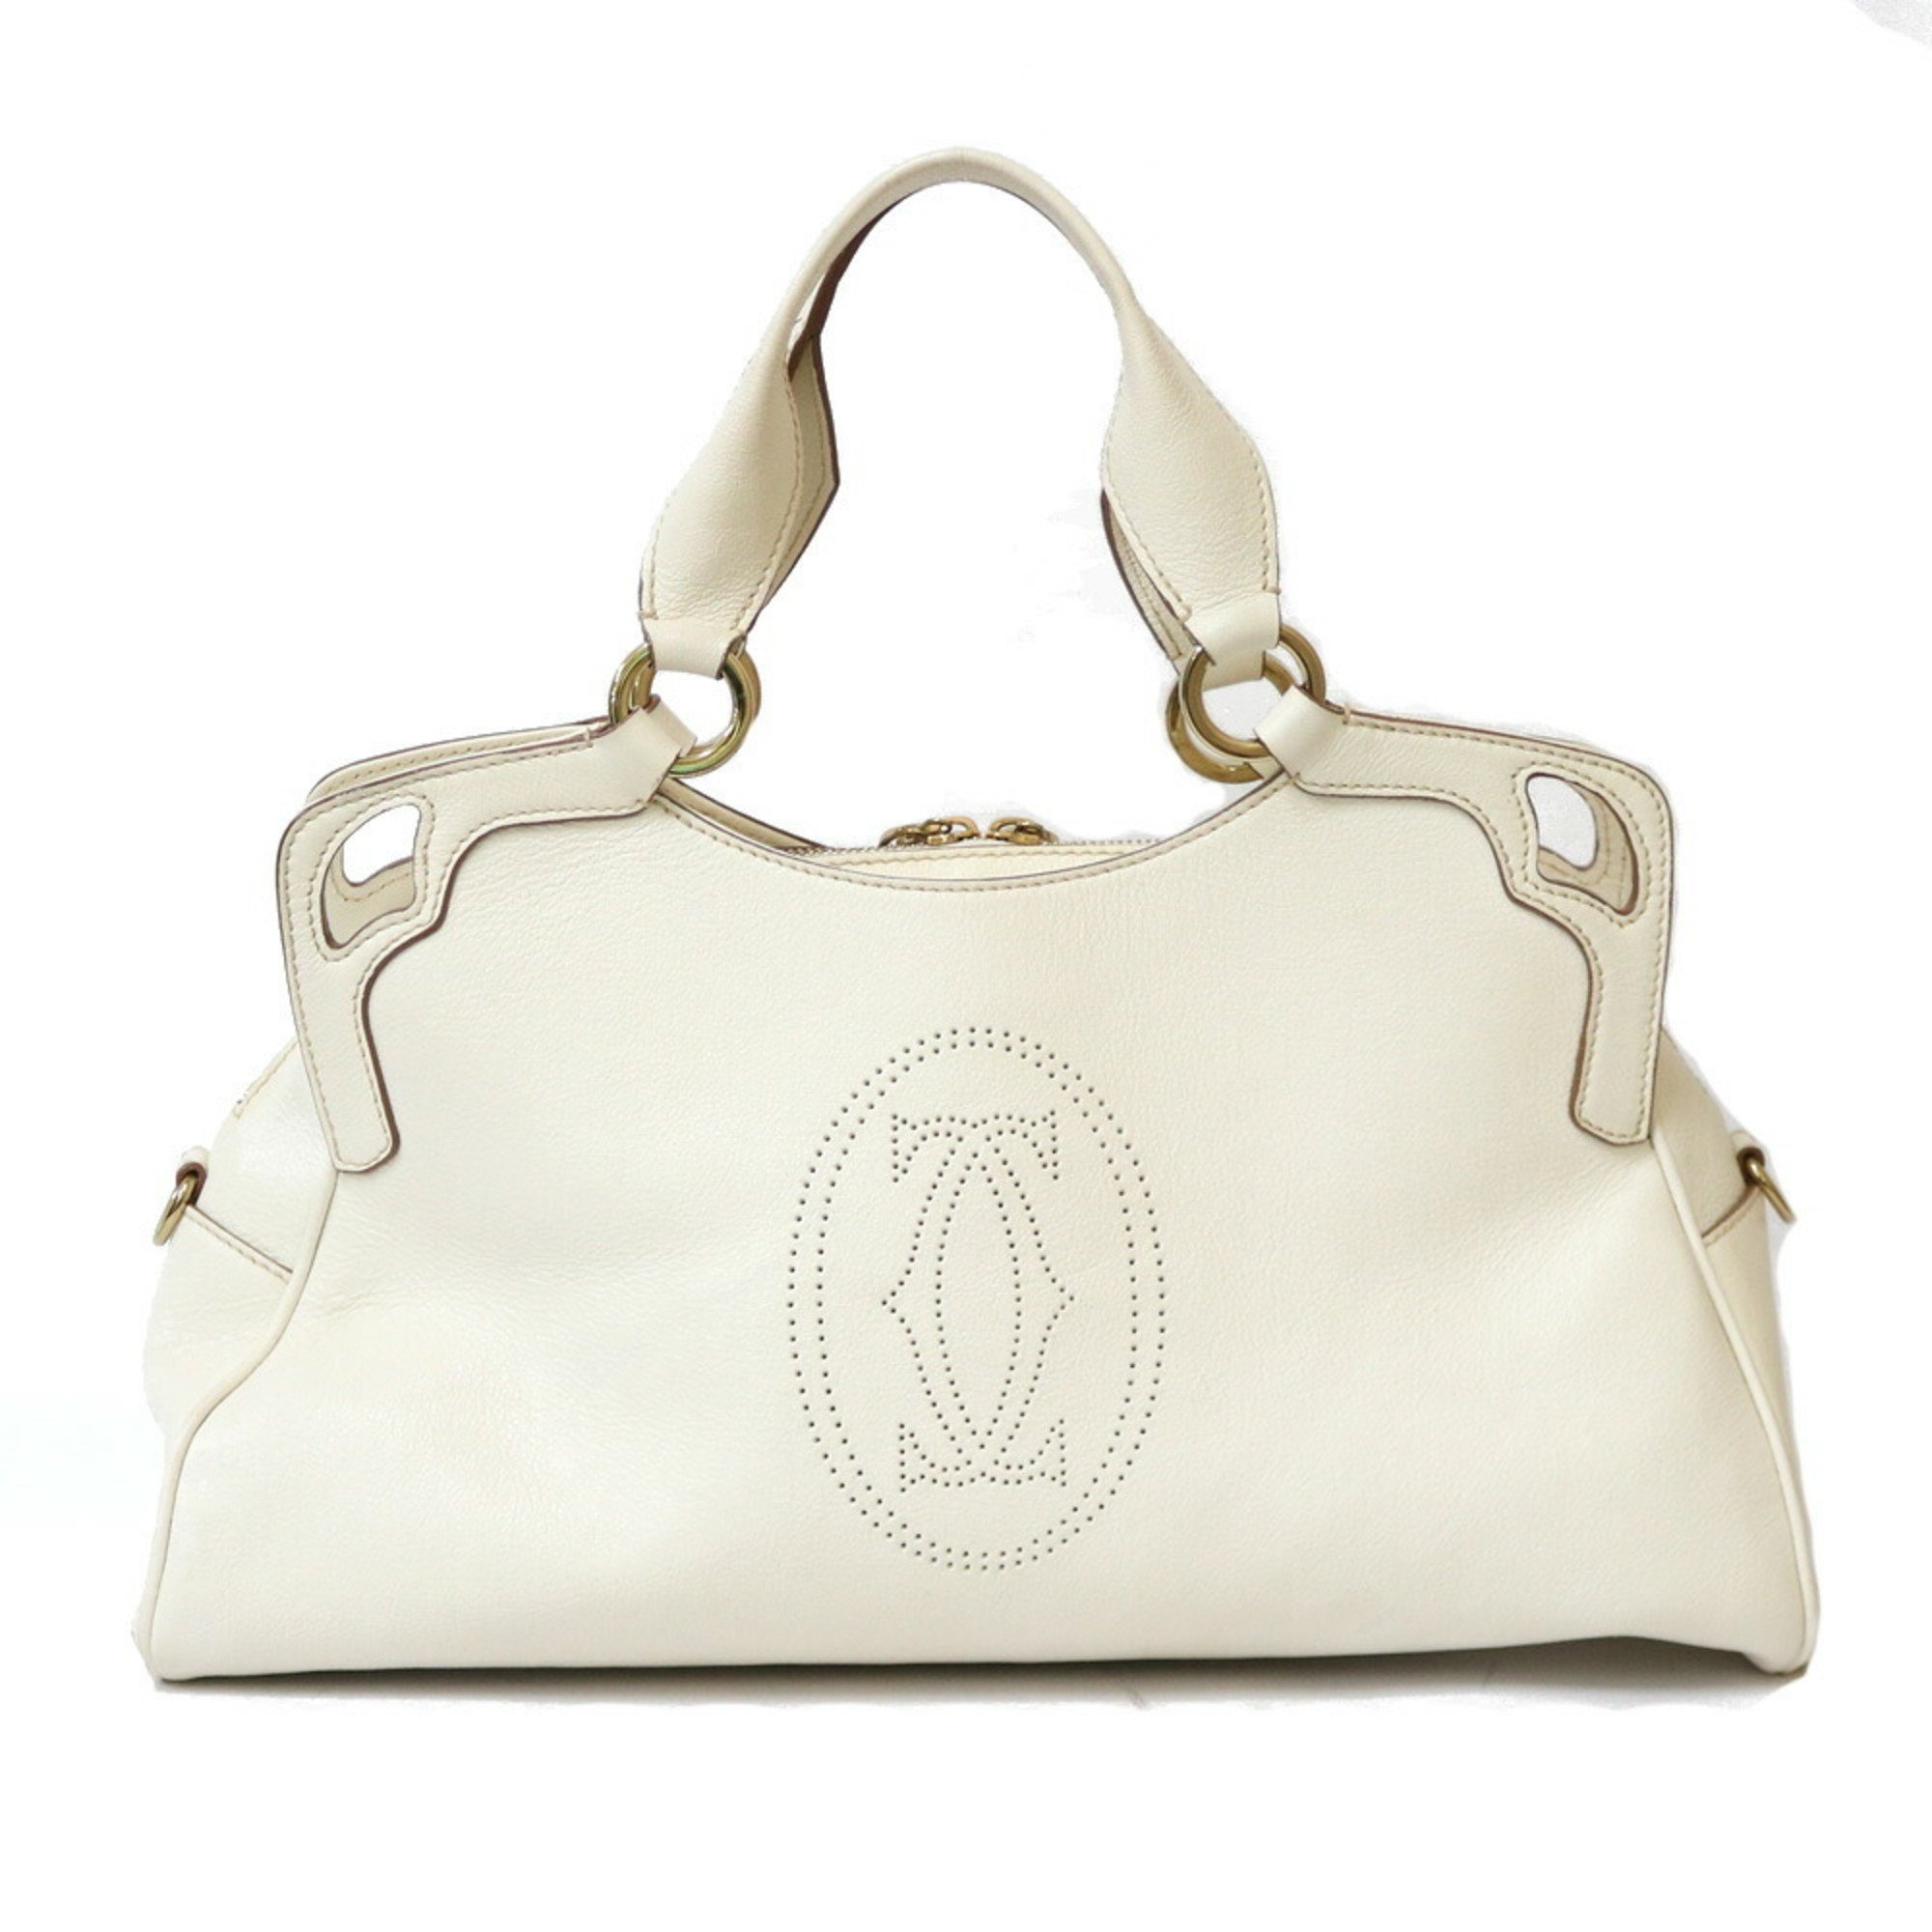 Cartier Marcello de Shoulder Bag Leather White Ladies CARTIER Handbag